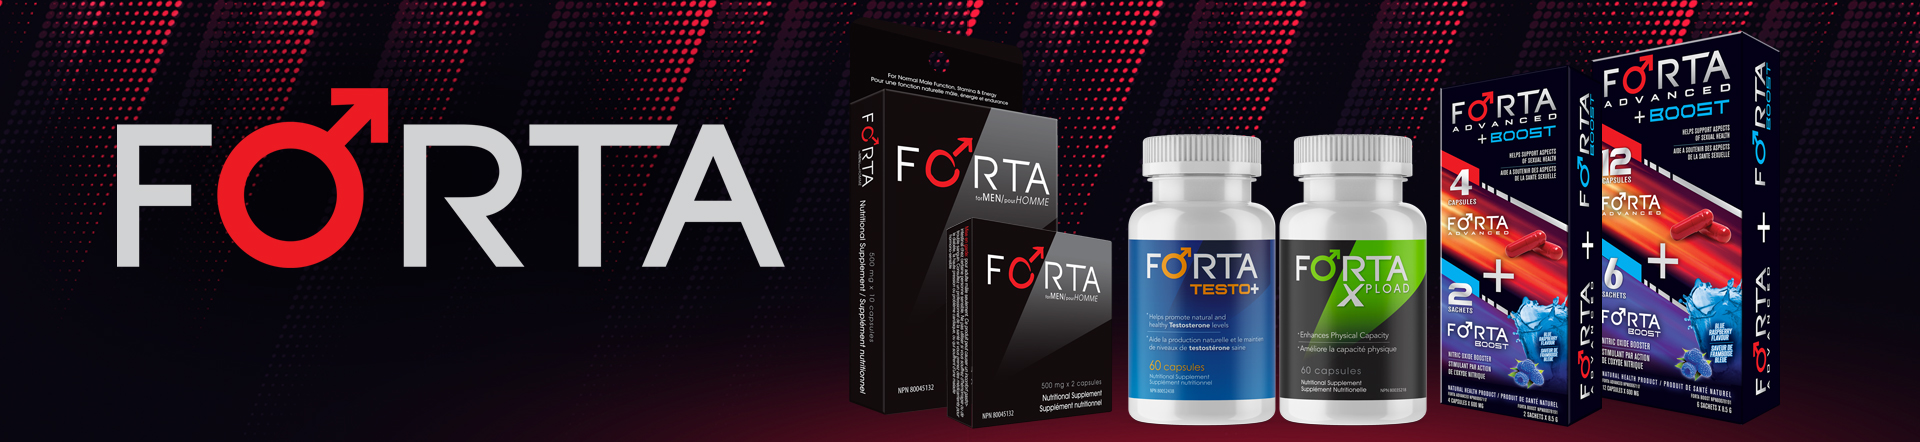 Forta Male & Female Sexual Enhancement